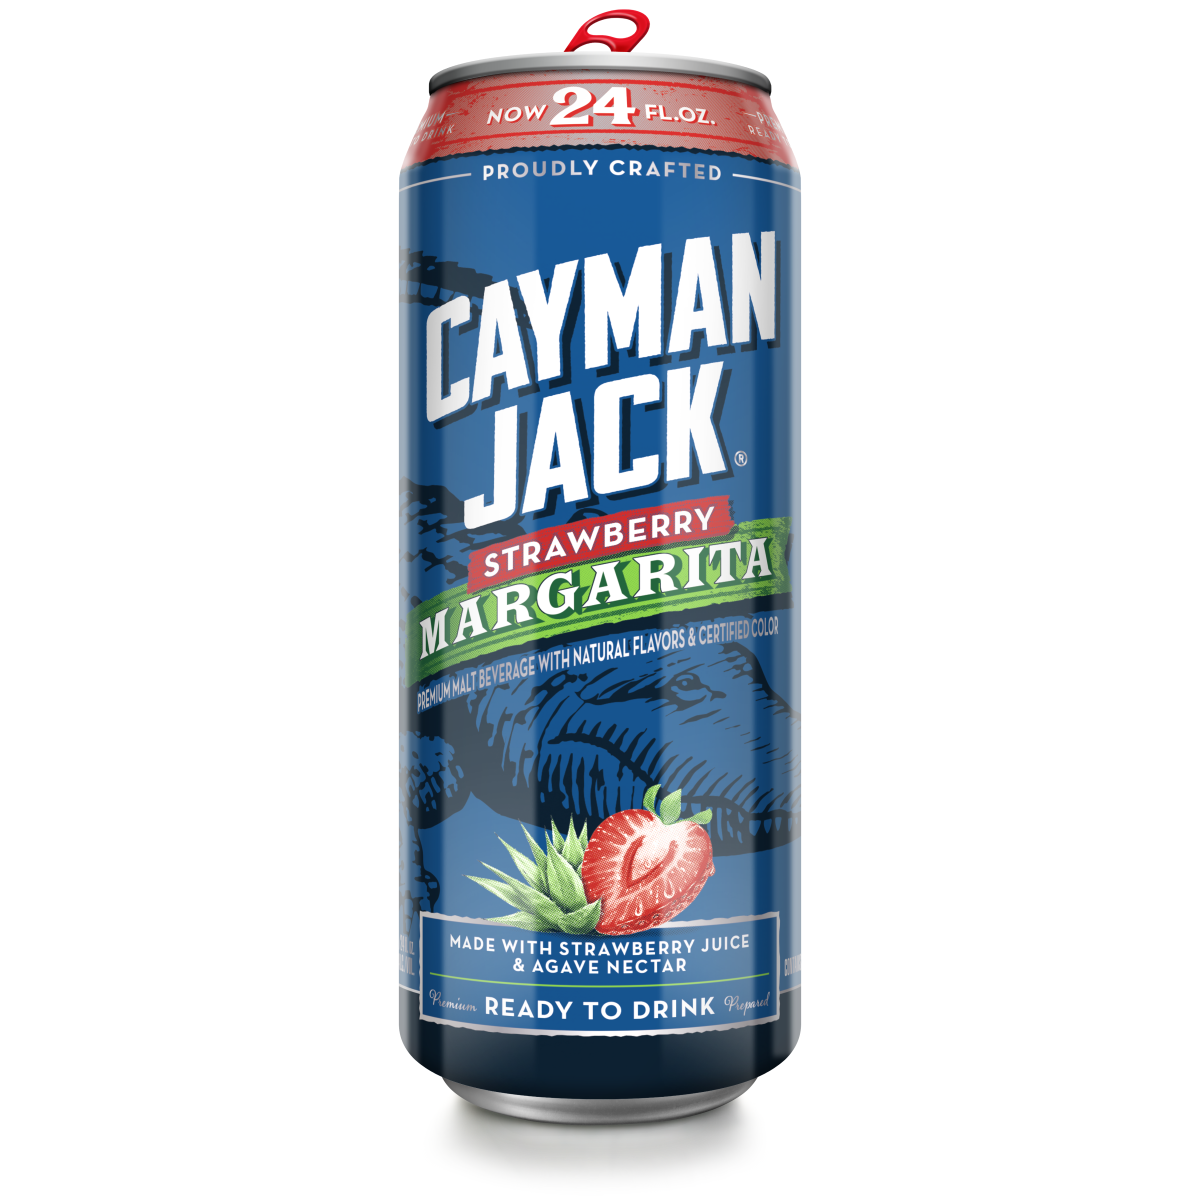 cayman-jack-strawberry-margarita-finley-beer